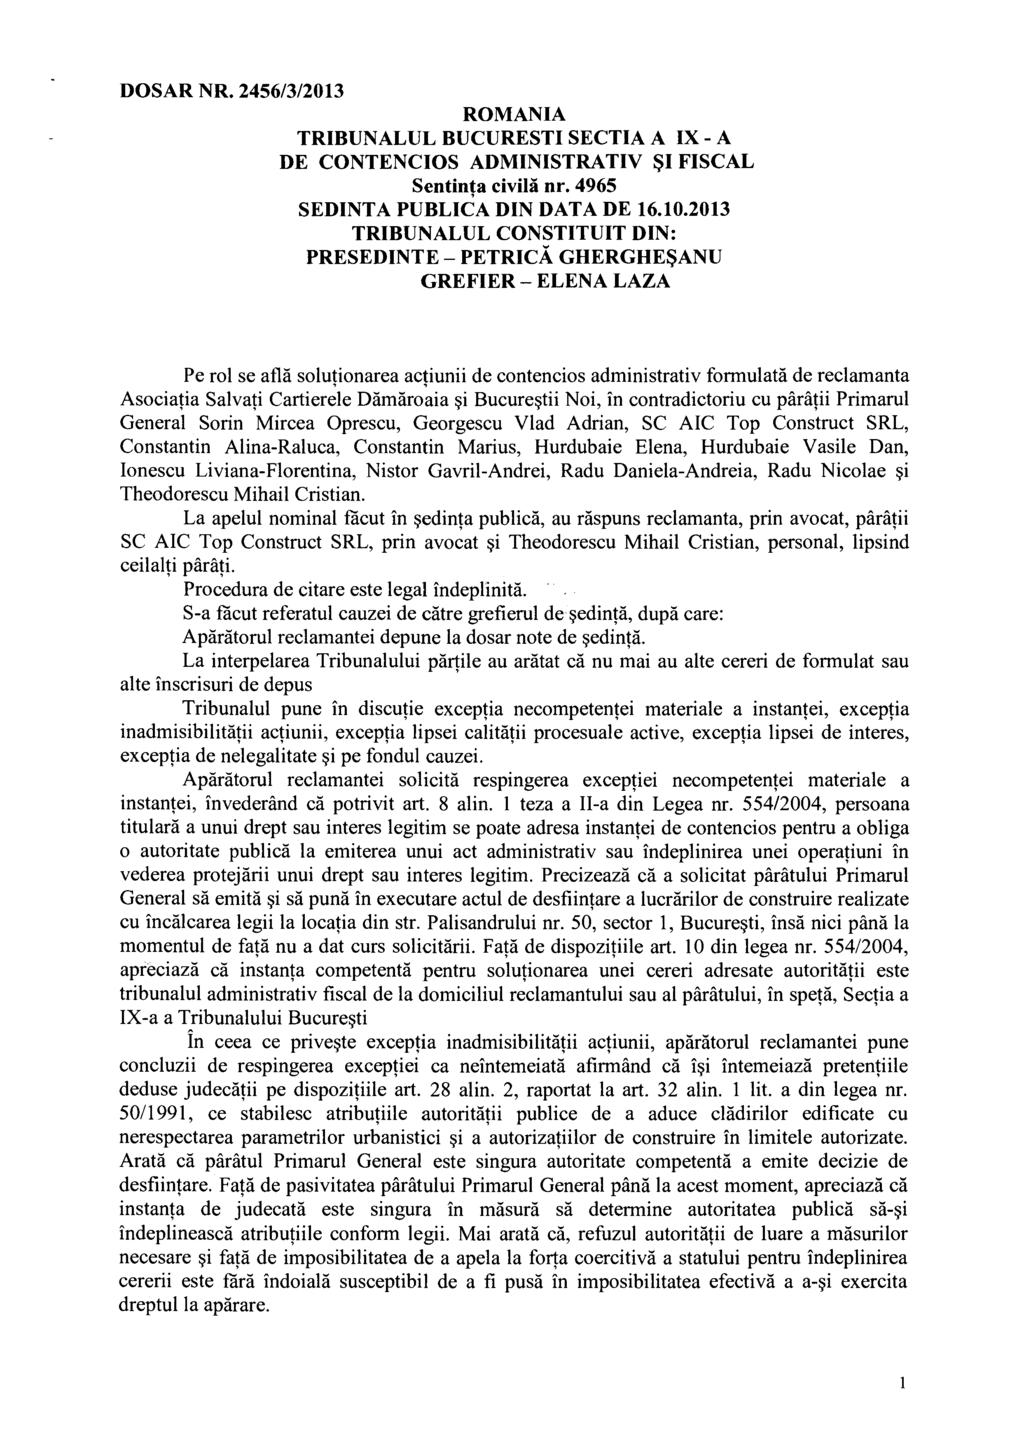 DOSAR NR. 2456/3/2013 ROMANIA TRIBUNALUL BUCURESTI SECTIA A IX - A DE CONTENCIOS ADMINISTRA TIV ~I FISCAL Sentinta civila nr. 4965 SEDINTA PUBLICA DIN DATA DE 16.10.